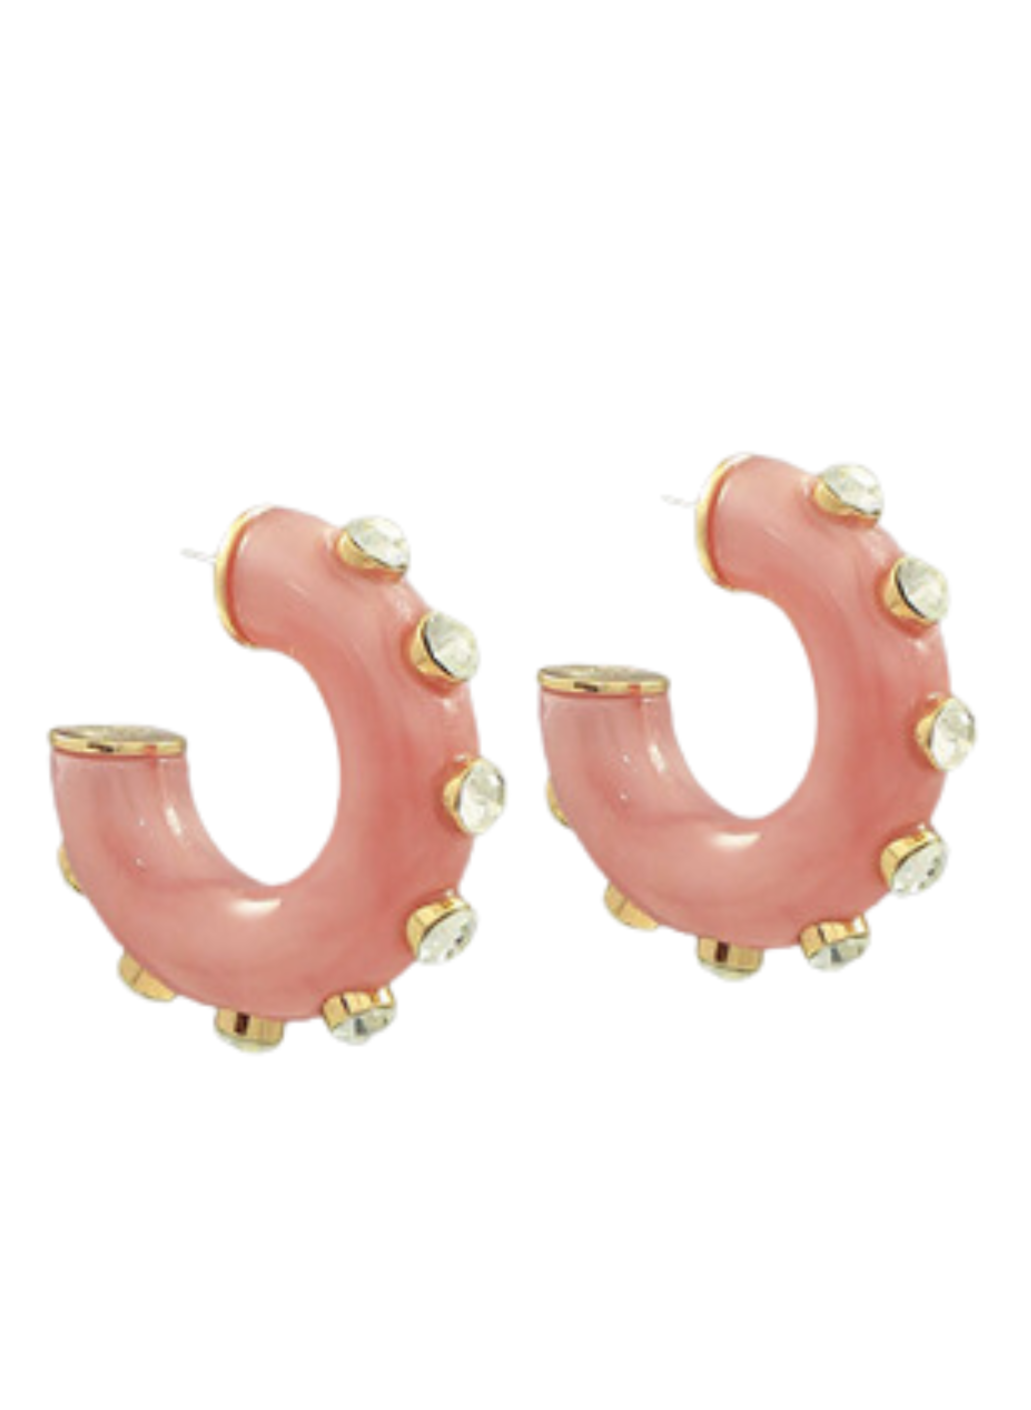 Acrylic Hoop with Rhinestone Earrings - Pink